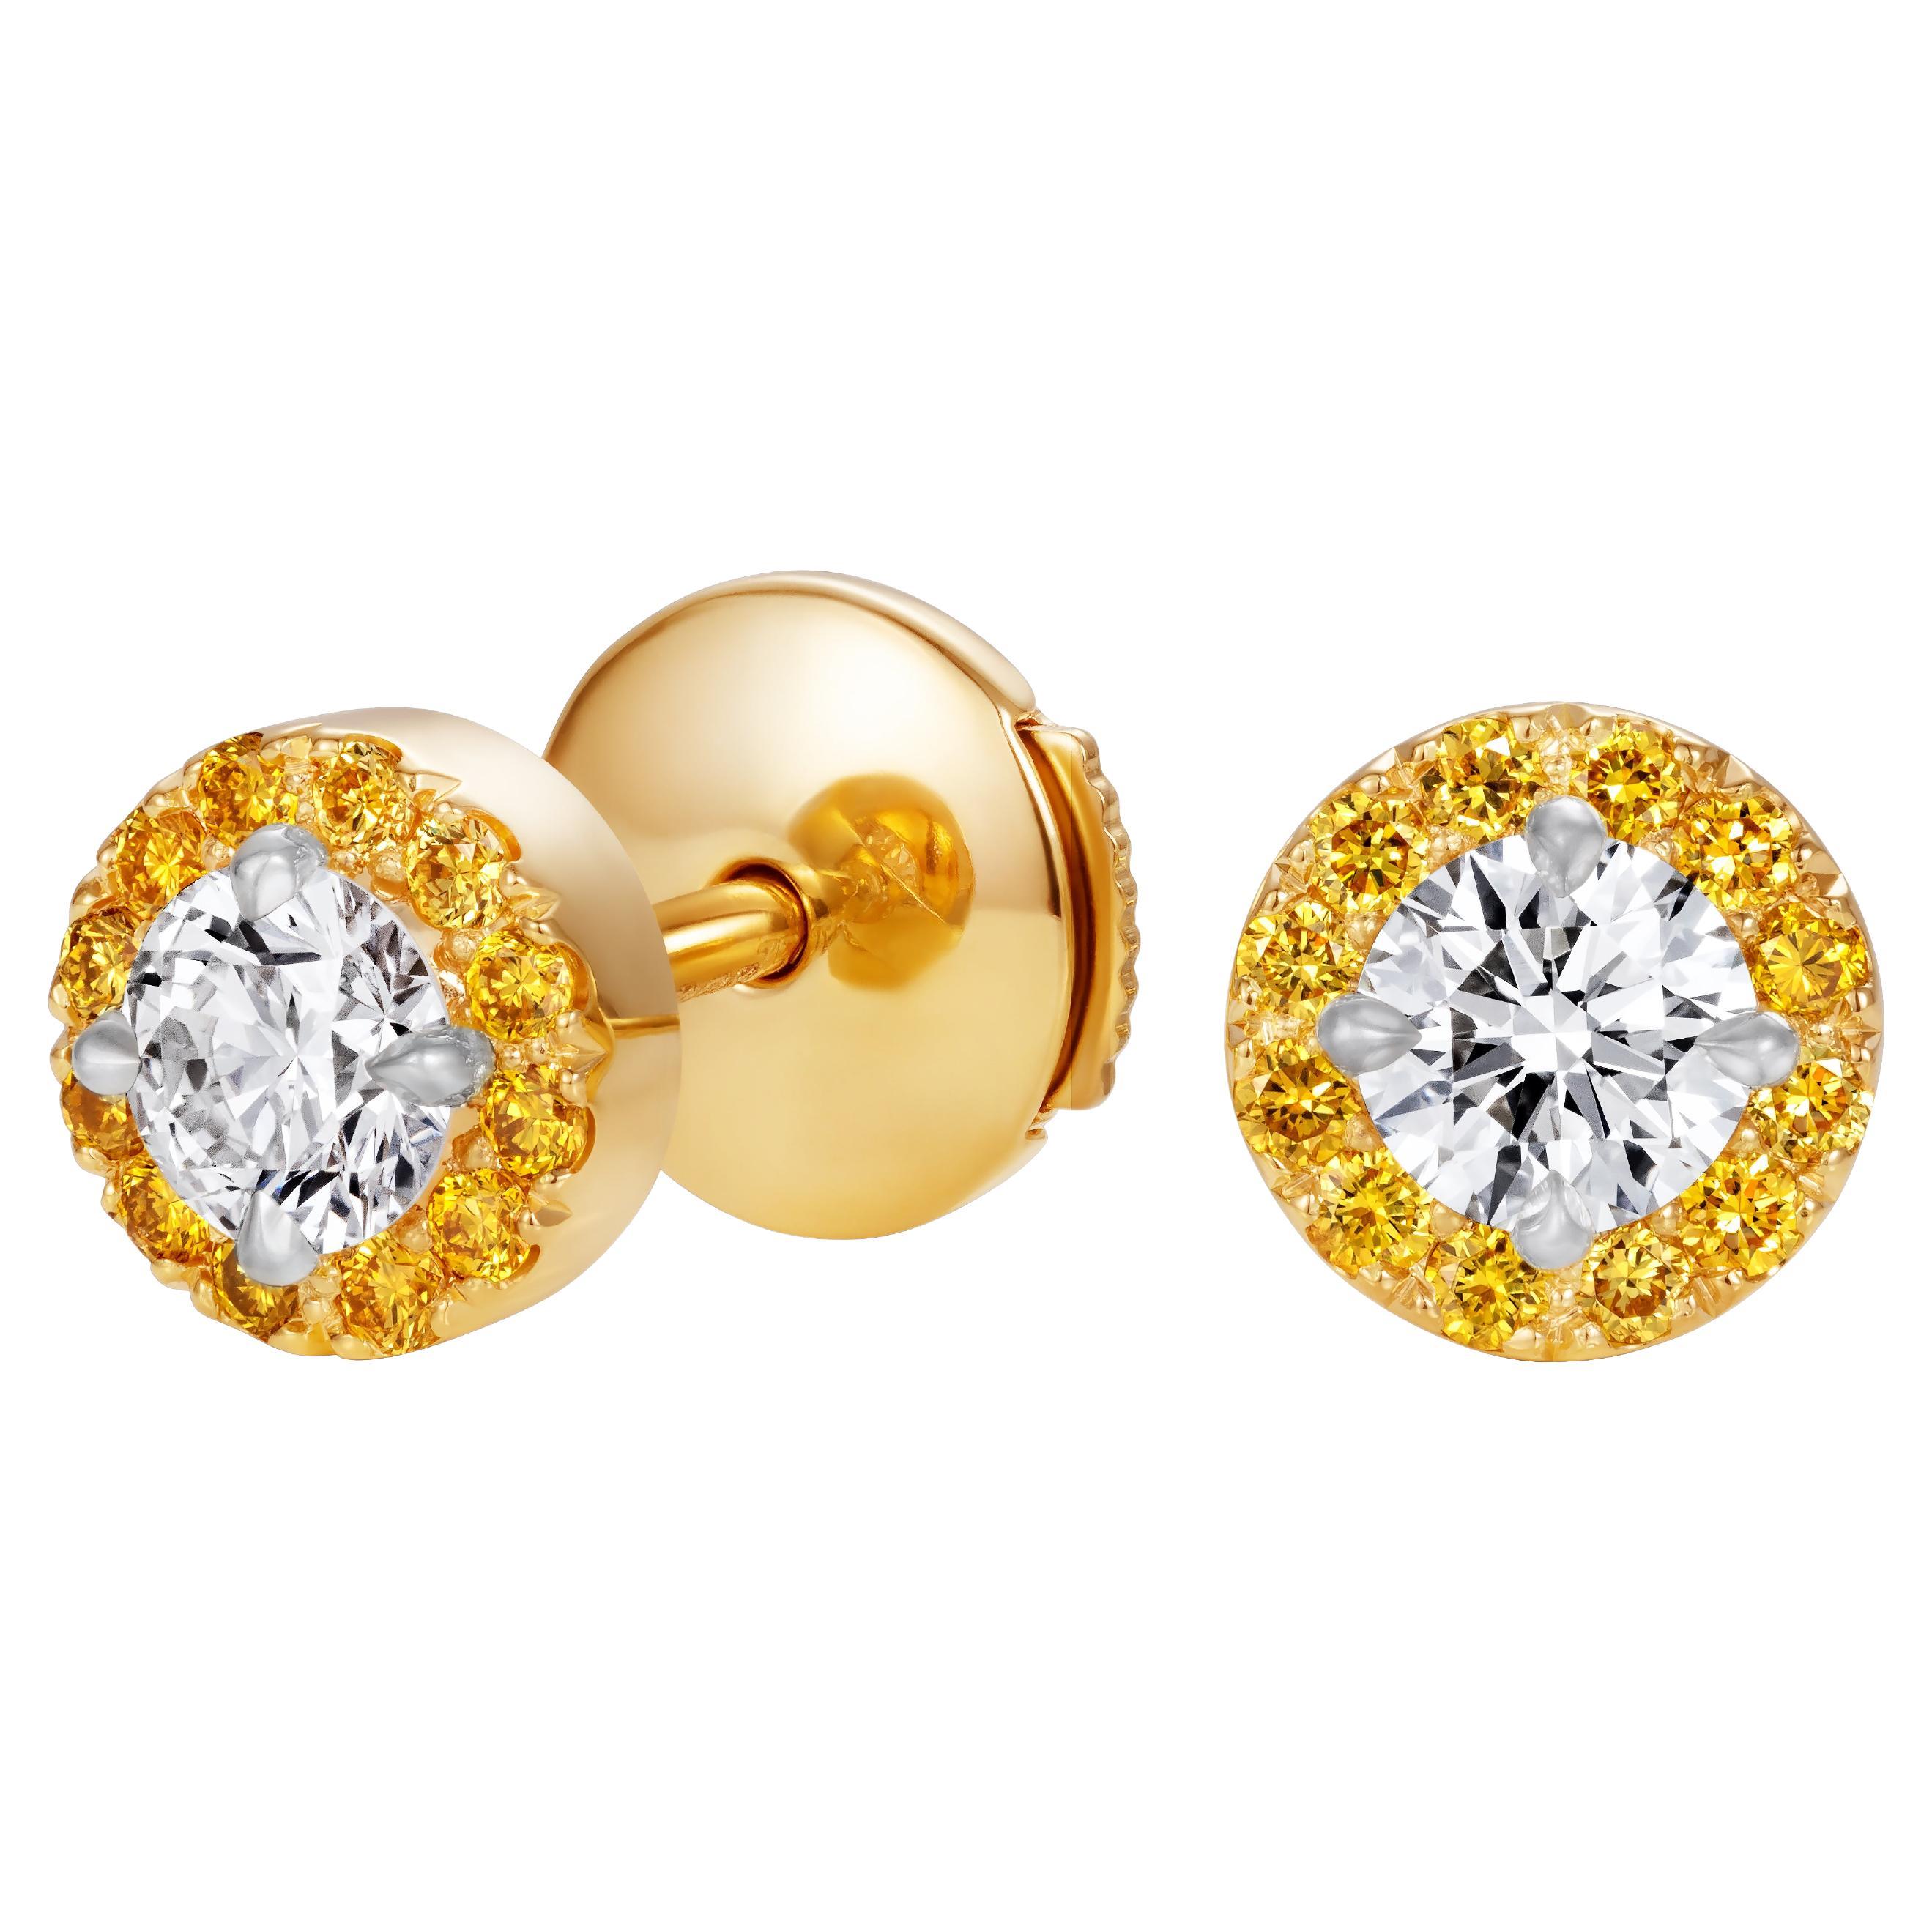 Hirsh Regal Diamond and Yellow Diamond Earrings